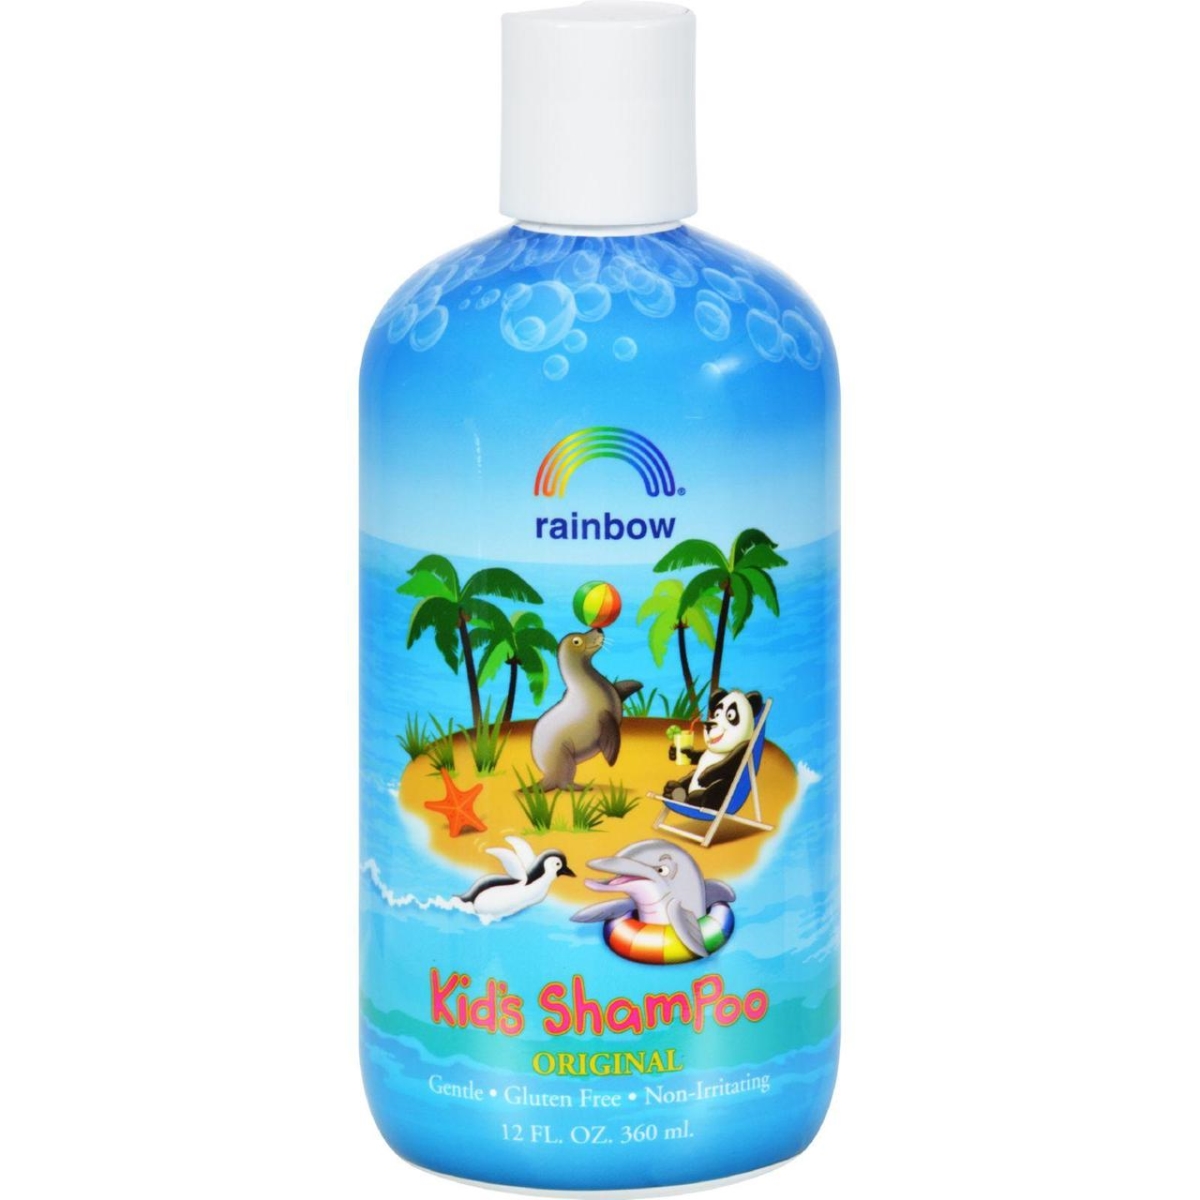 Hg0177345 12 Fl Oz Organic Herbal Shampoo For Kids Original Scent